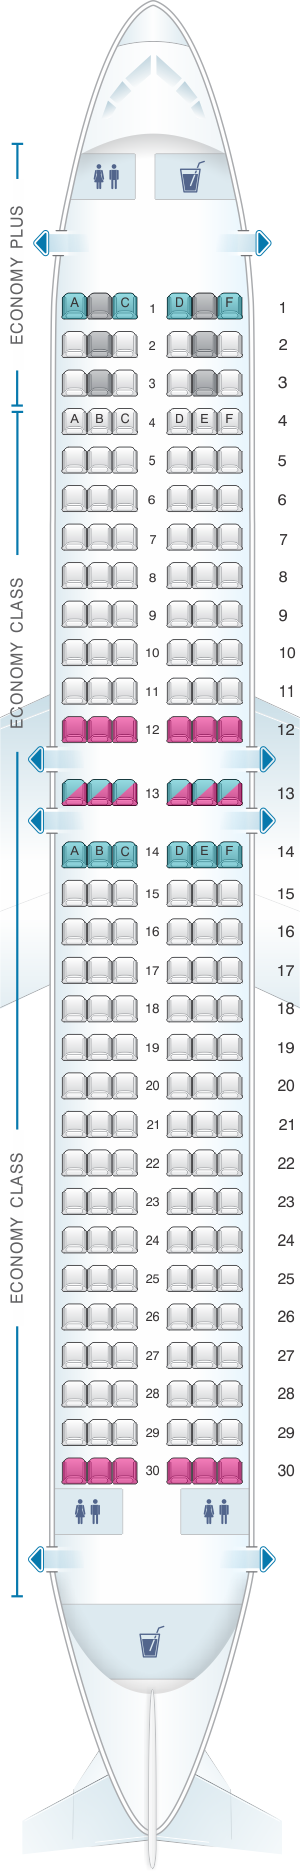 Seat map for WestJet Boeing B737 800